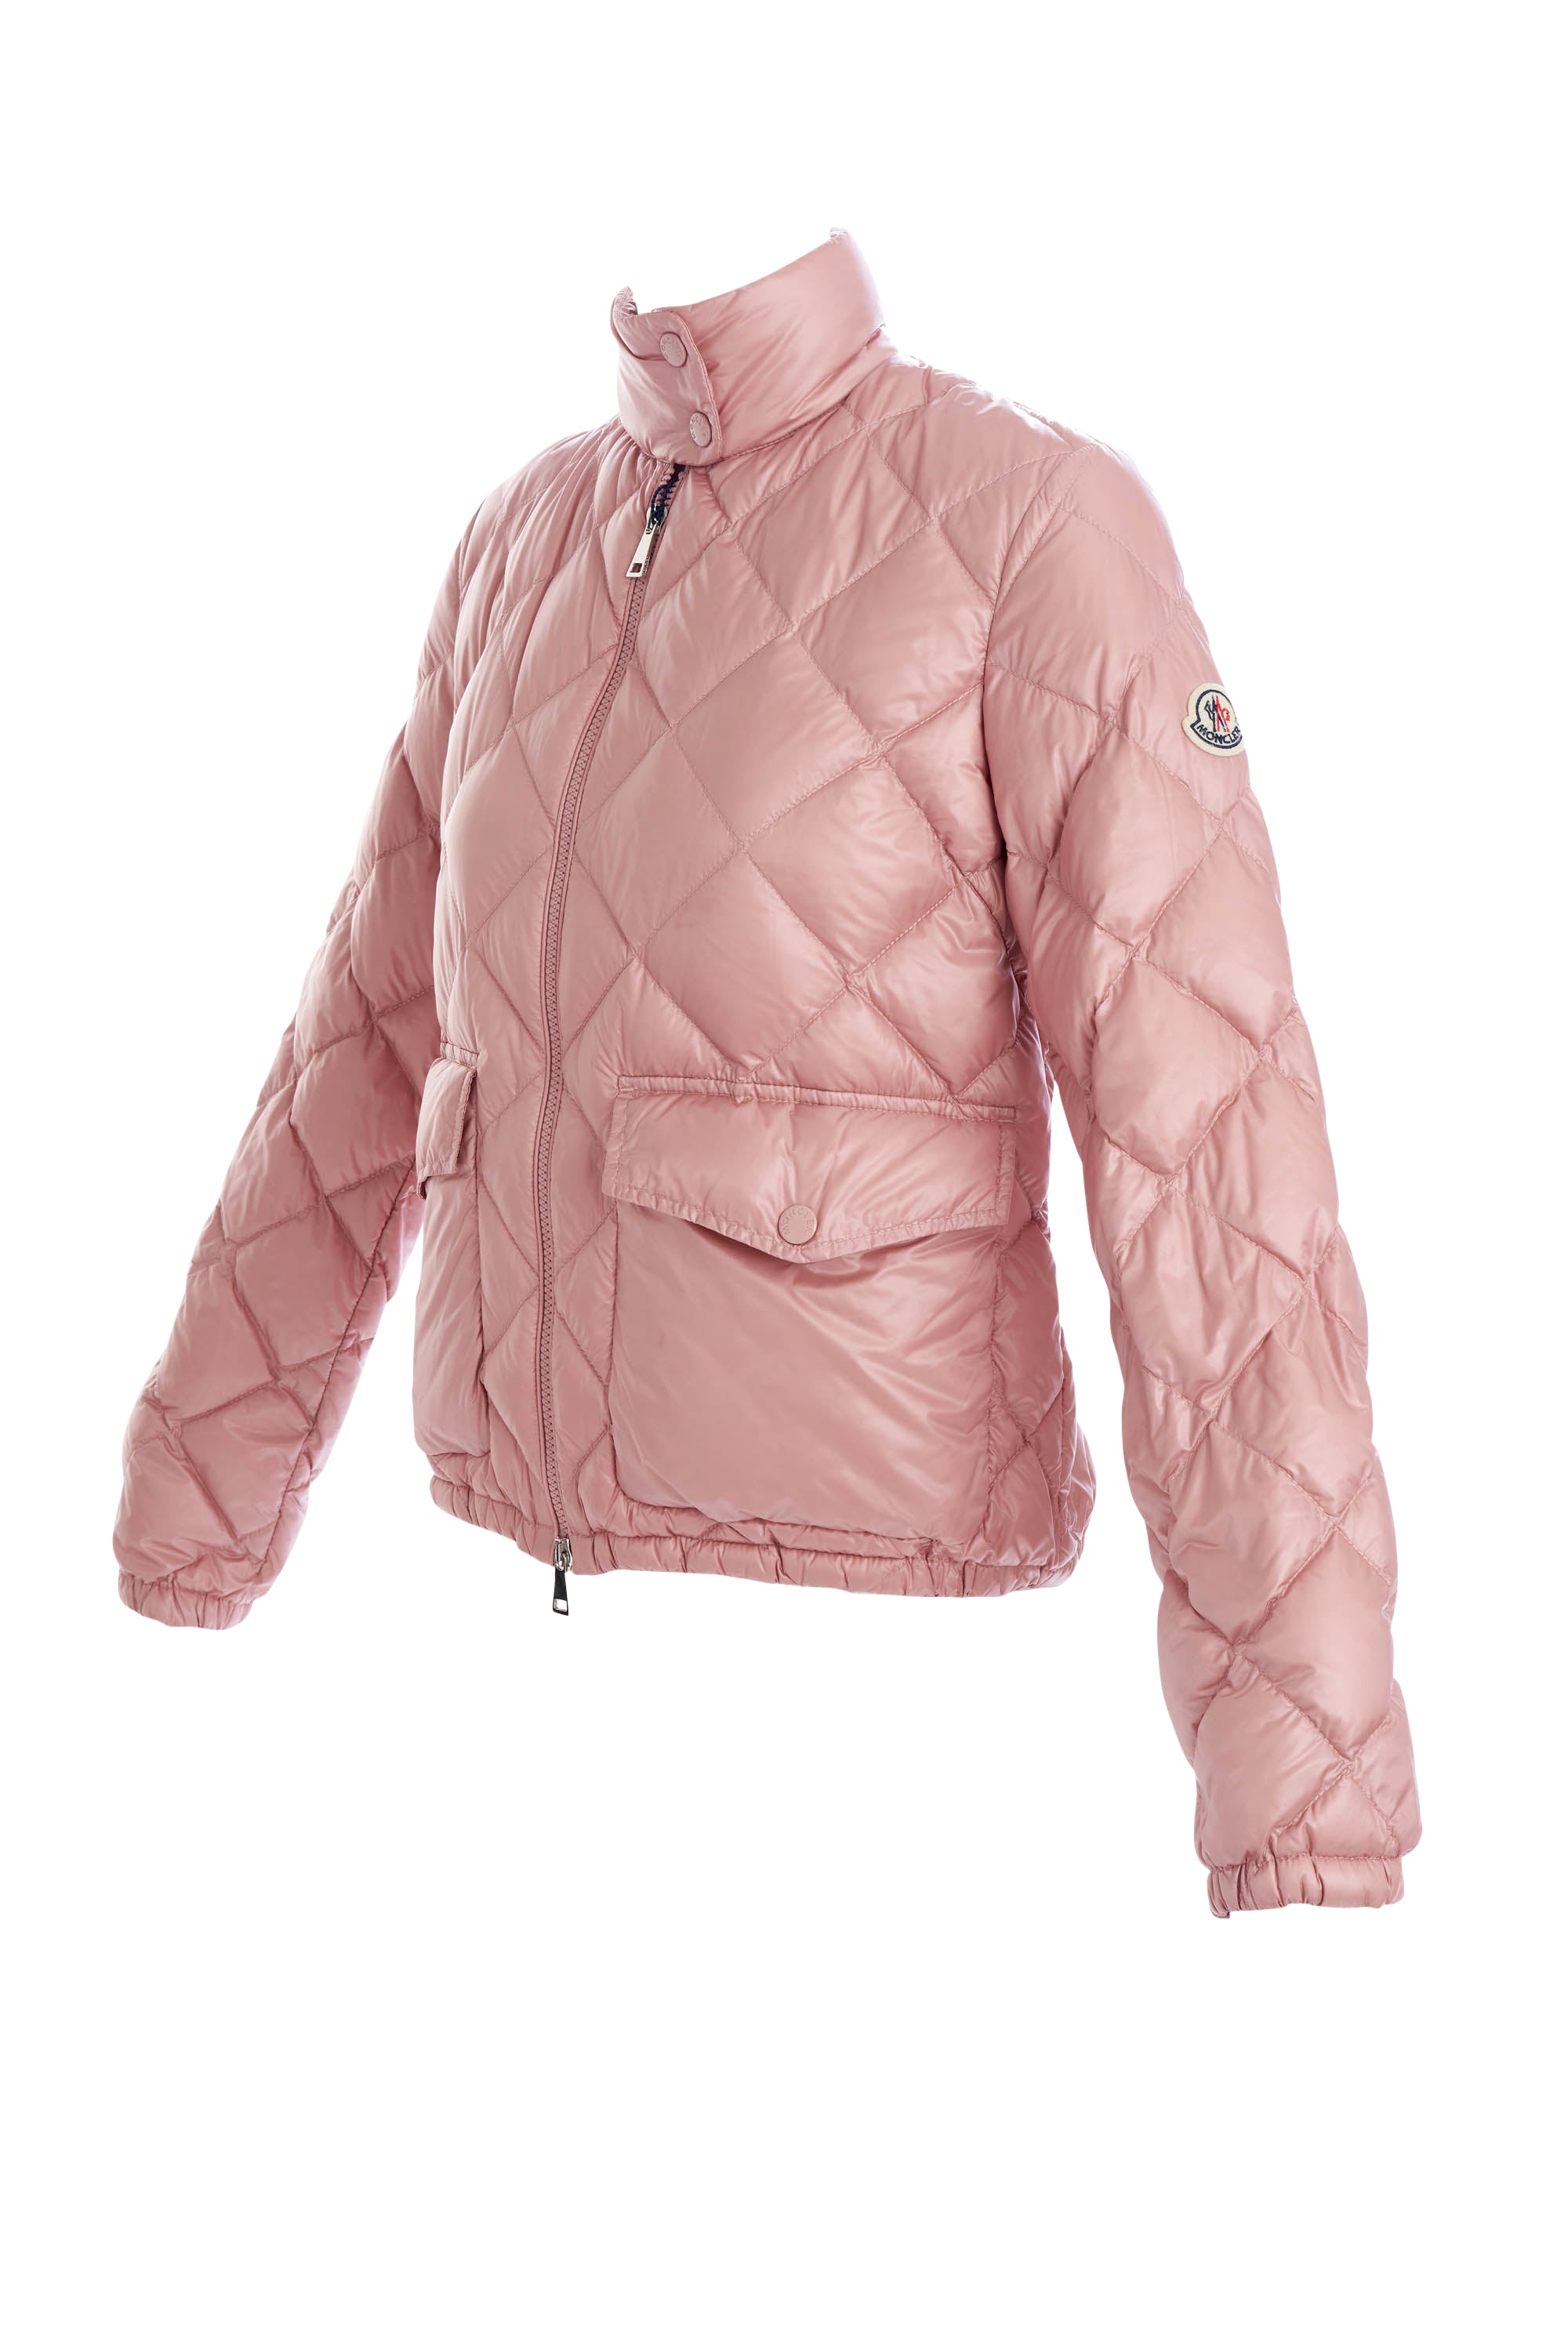 Moncler Pink Puffer Jacket Size 3